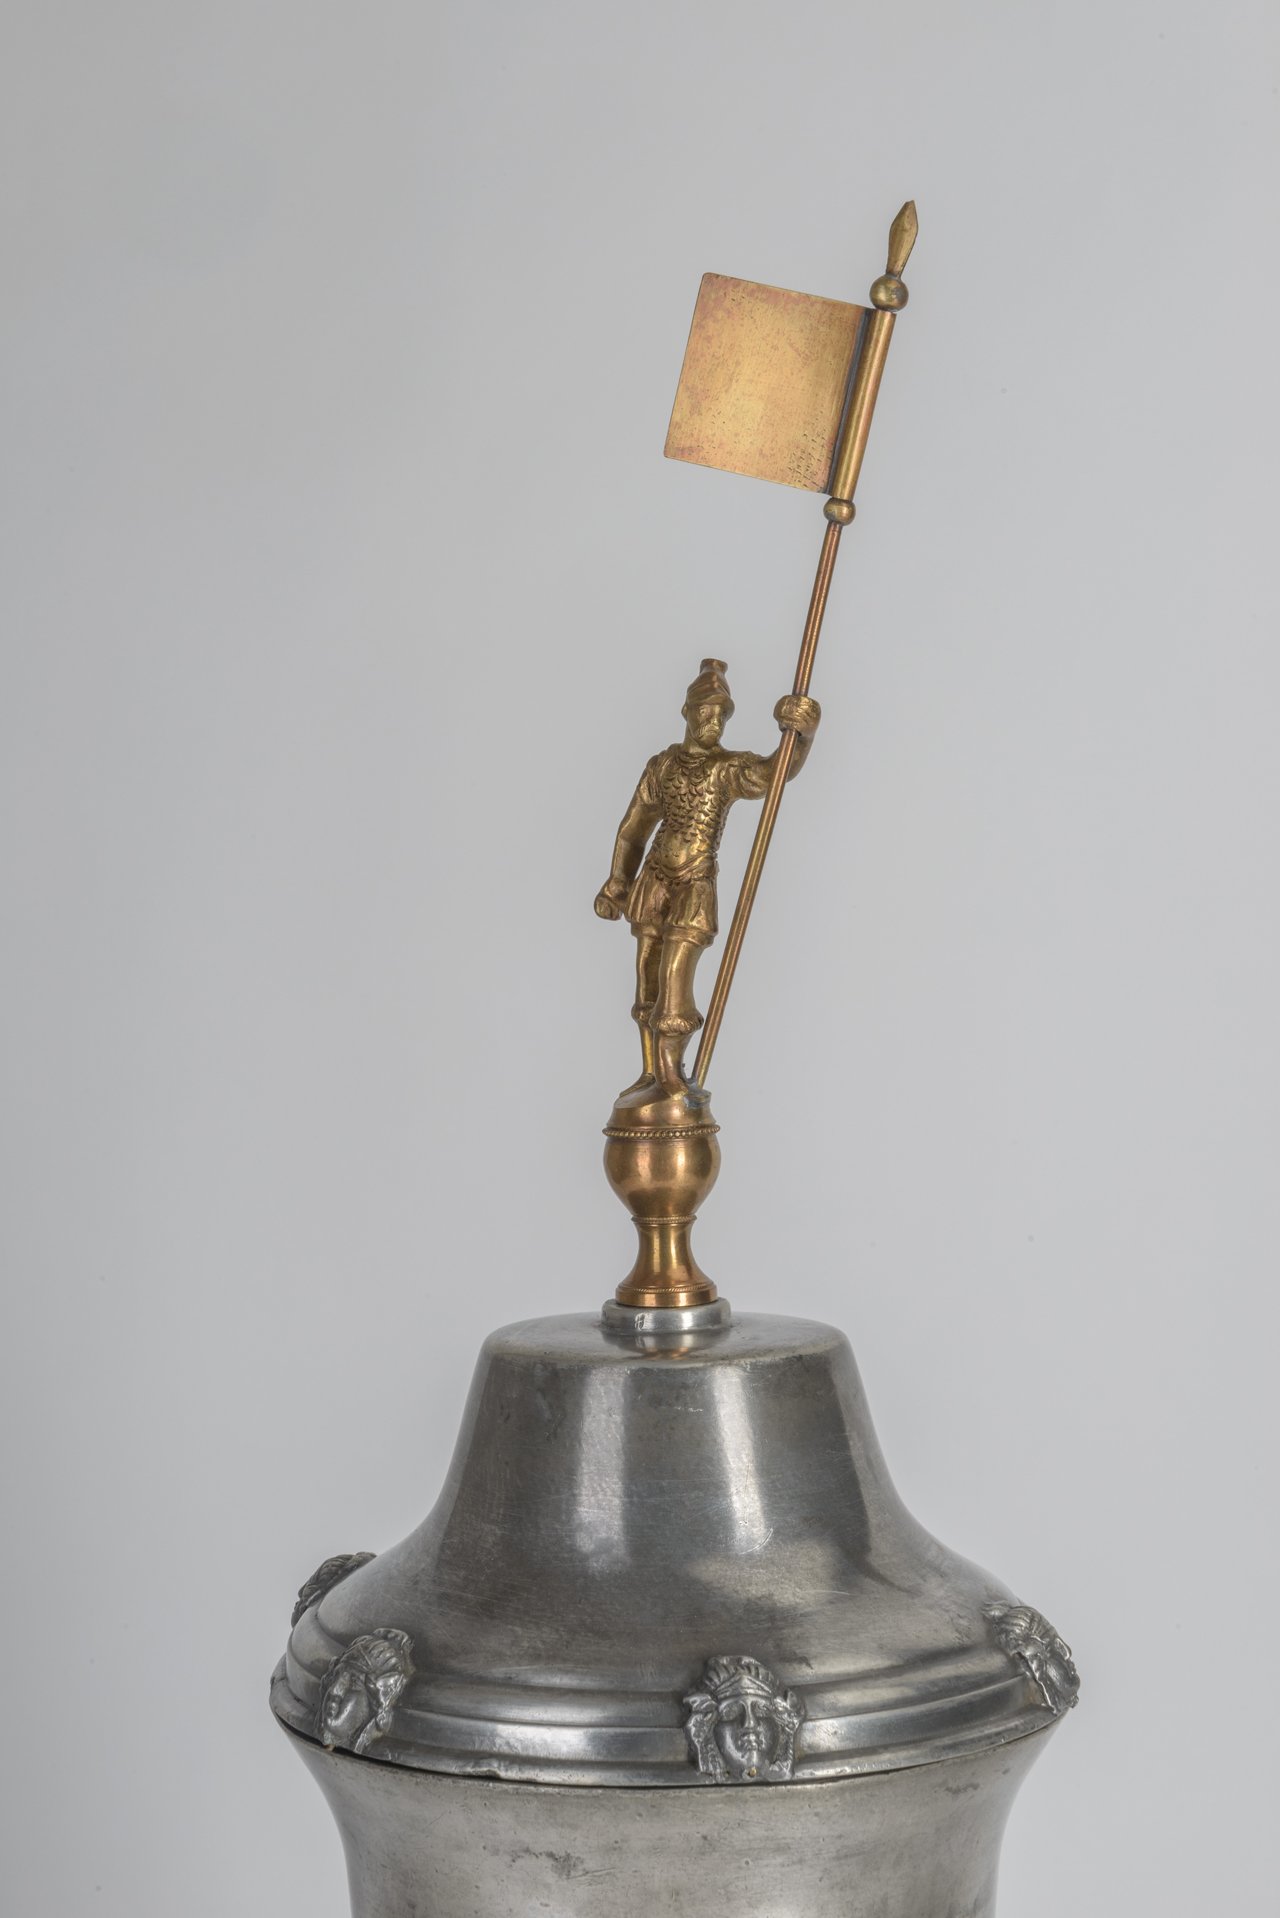 Willkomm-Pokal der Seidenwirker-Gesellen, 1840 (Stadtmuseum Brandenburg an der Havel CC BY-NC-SA)